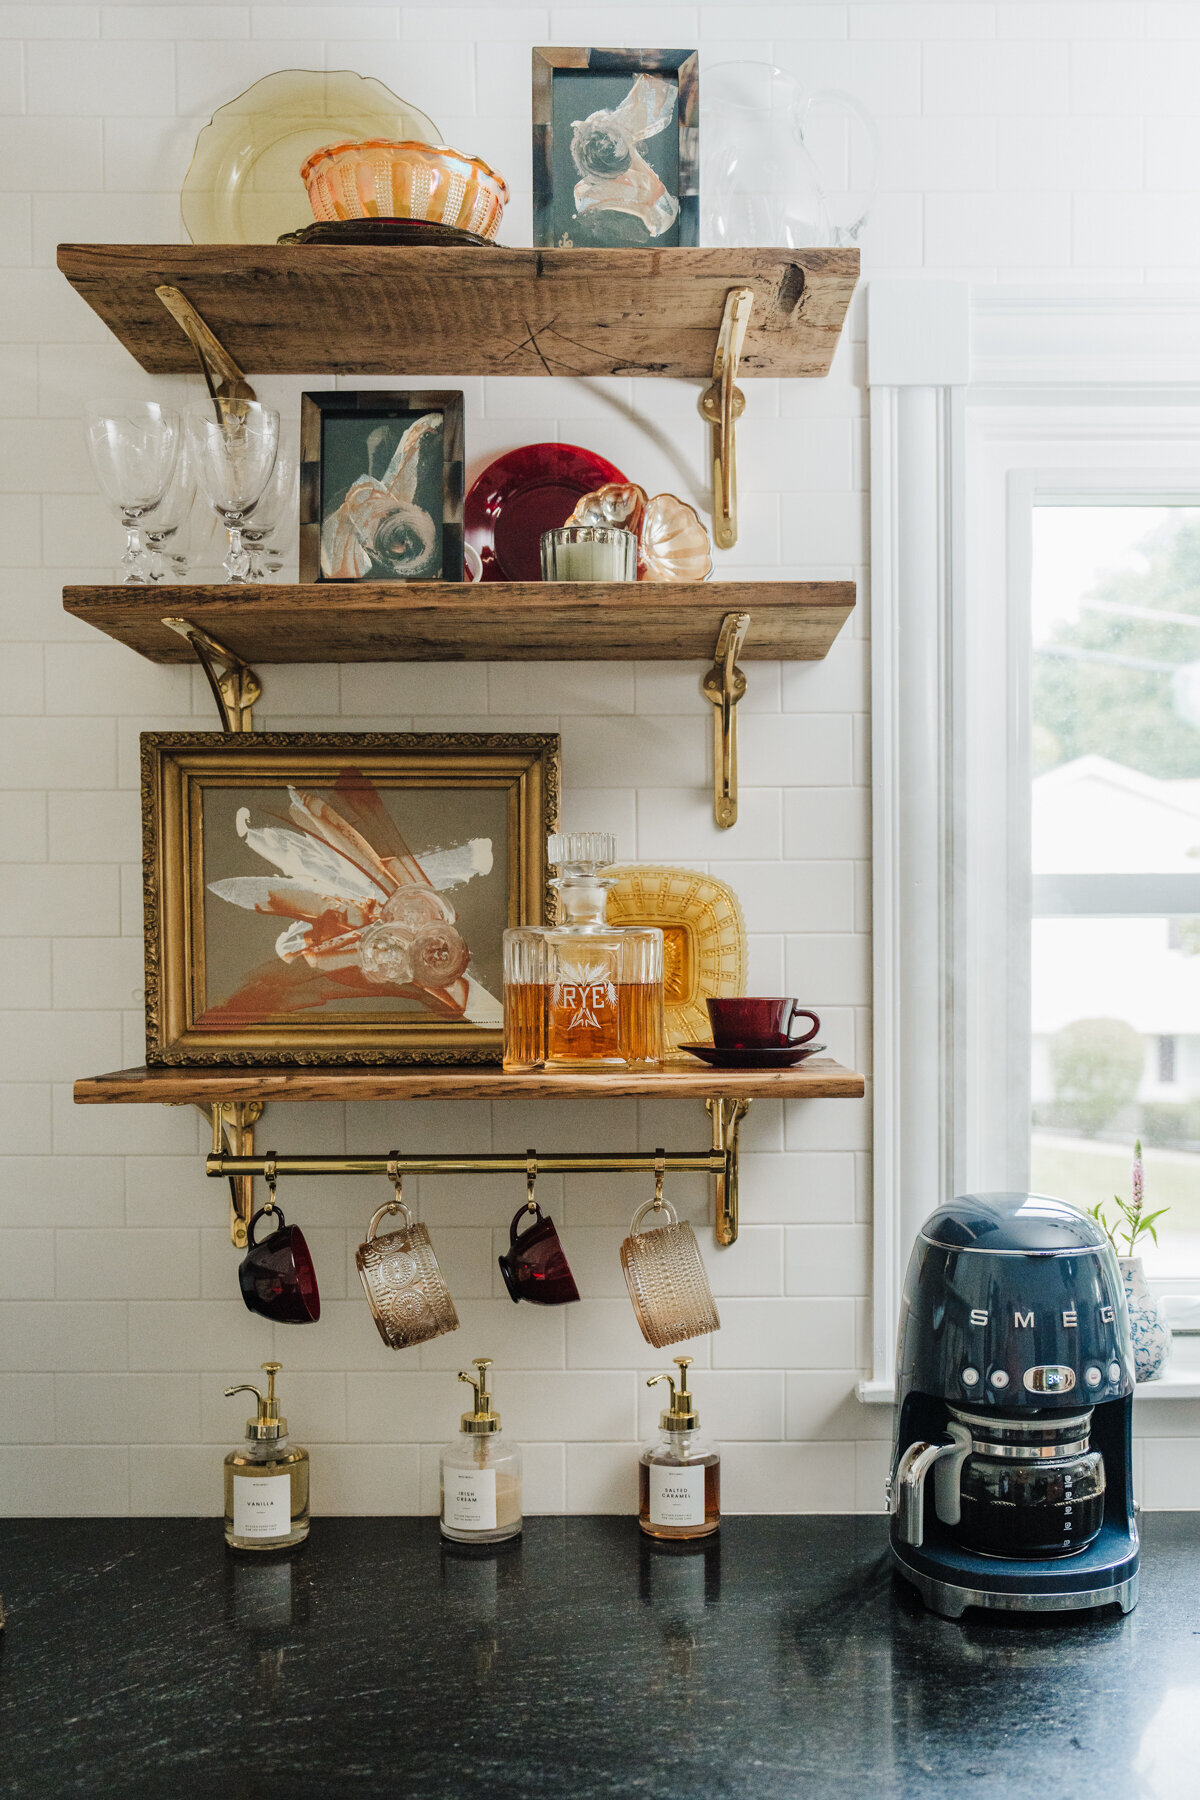 styled shelves in kitchen hold artwork